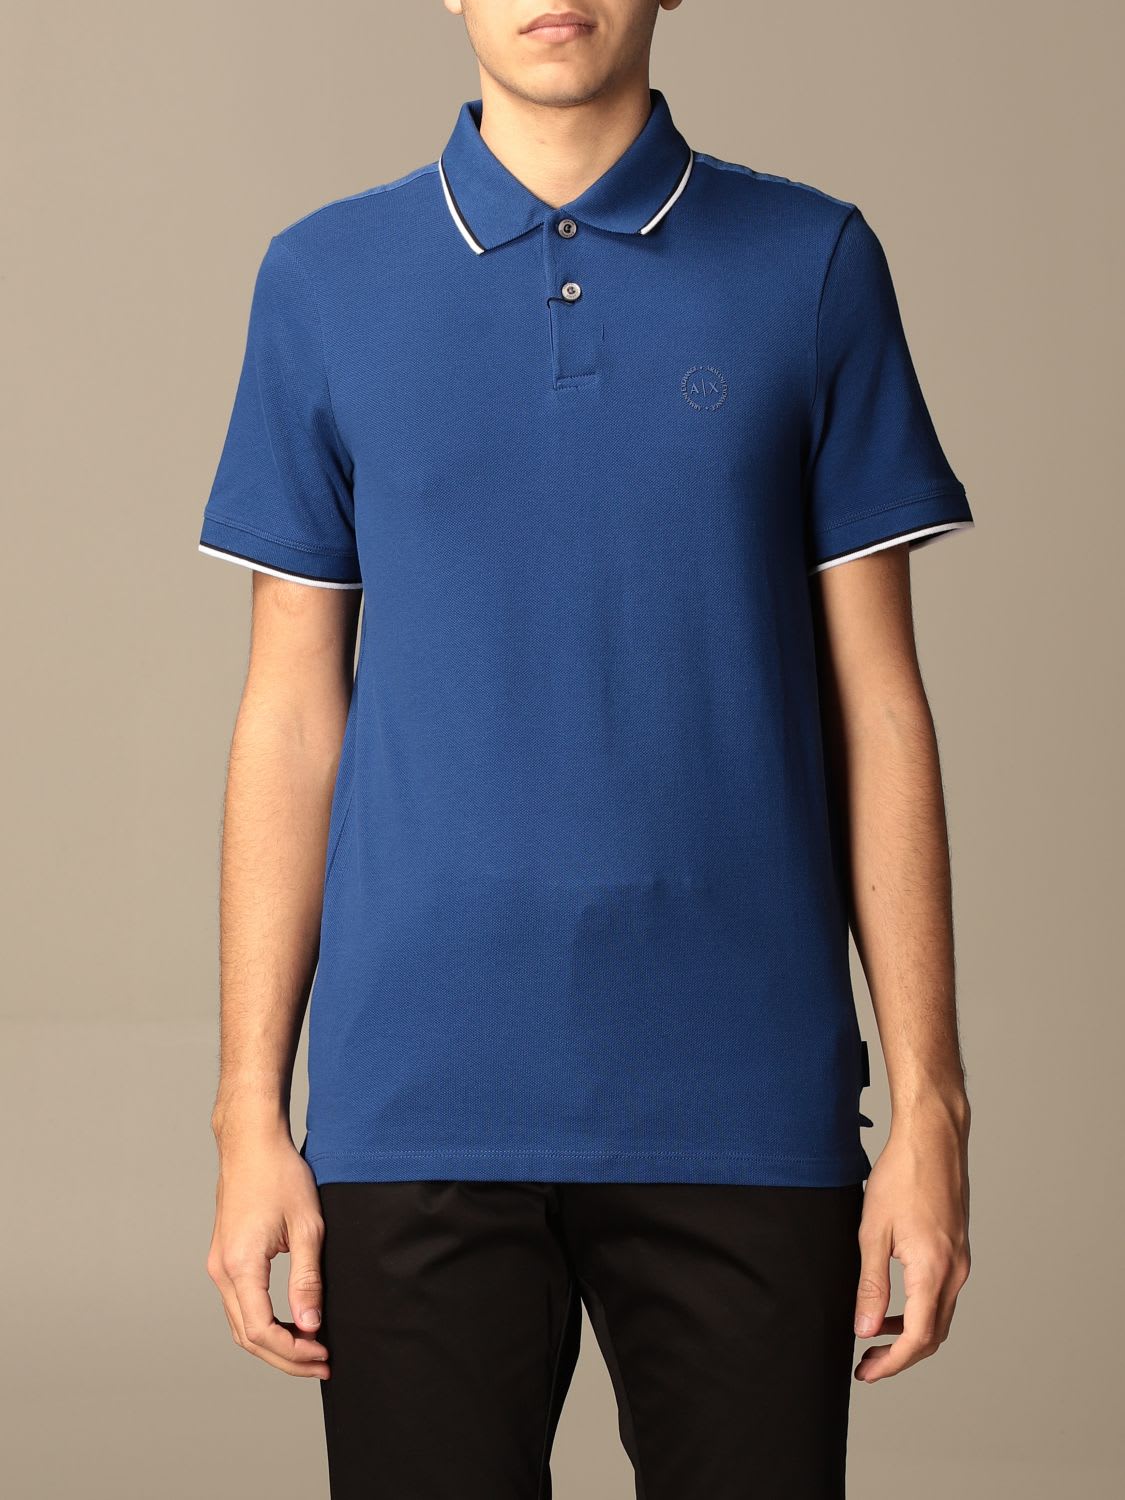 Armani Collezioni Armani Exchange Polo Shirt Armani Exchange Cotton Polo Shirt With Logo In Royal Blue